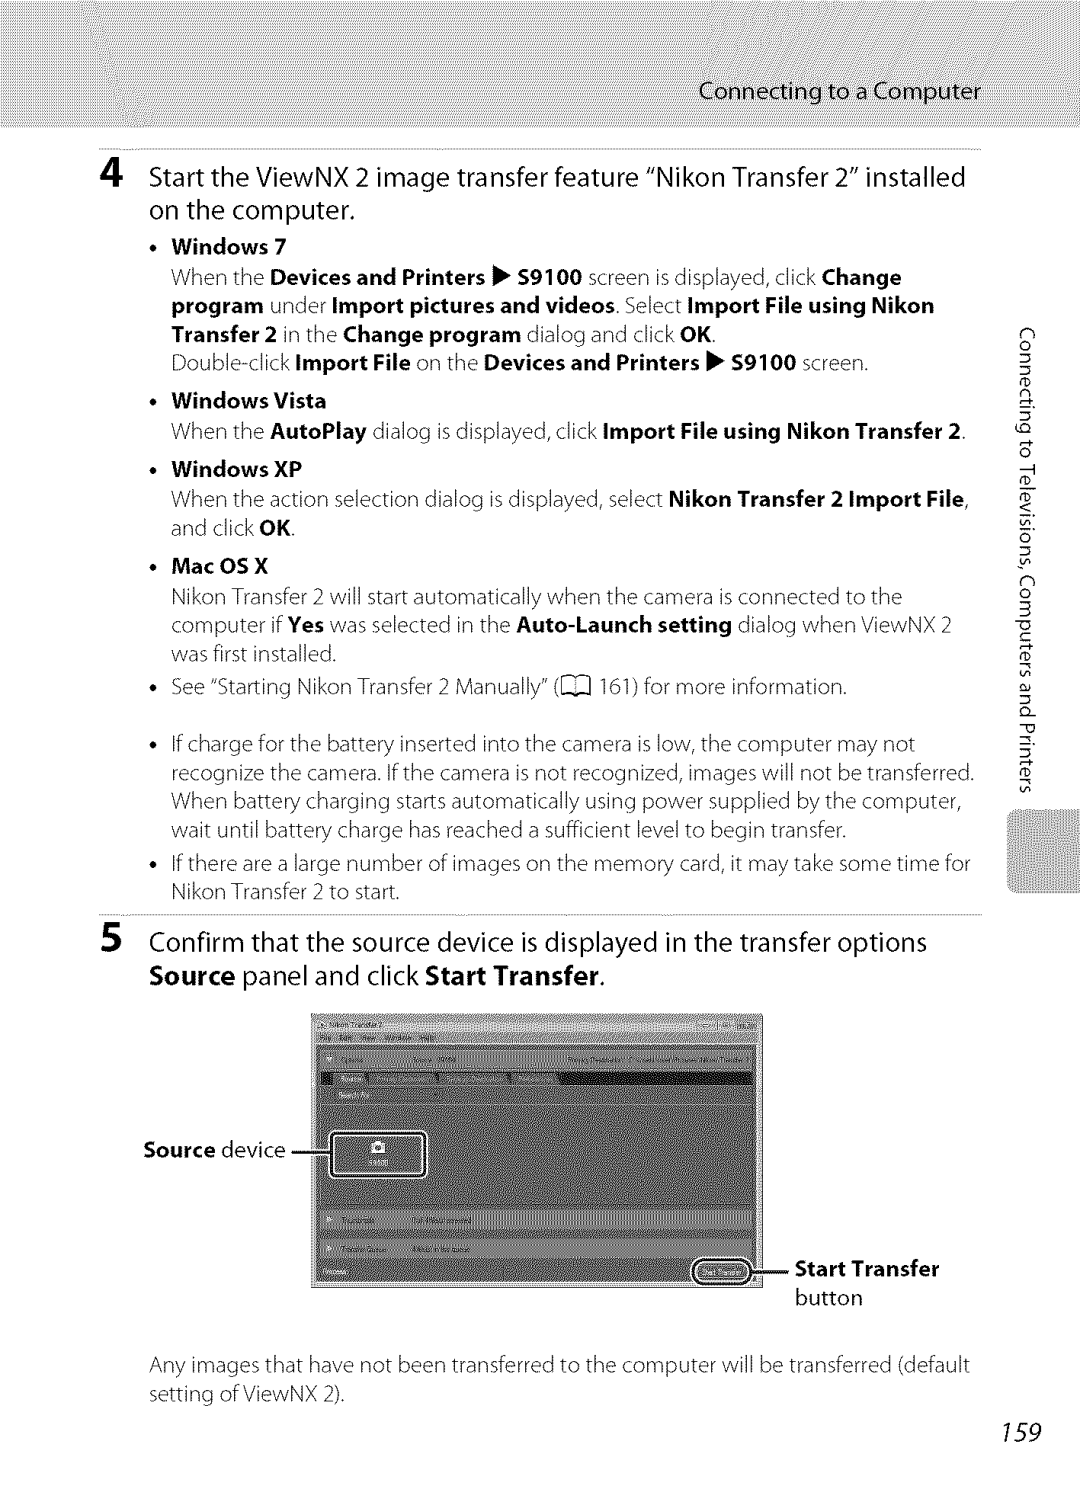 Nikon S9100 Transfer 2 in the Change program dialog and click OK, Windows Vista, Windows XP, select Nikon Transfer 